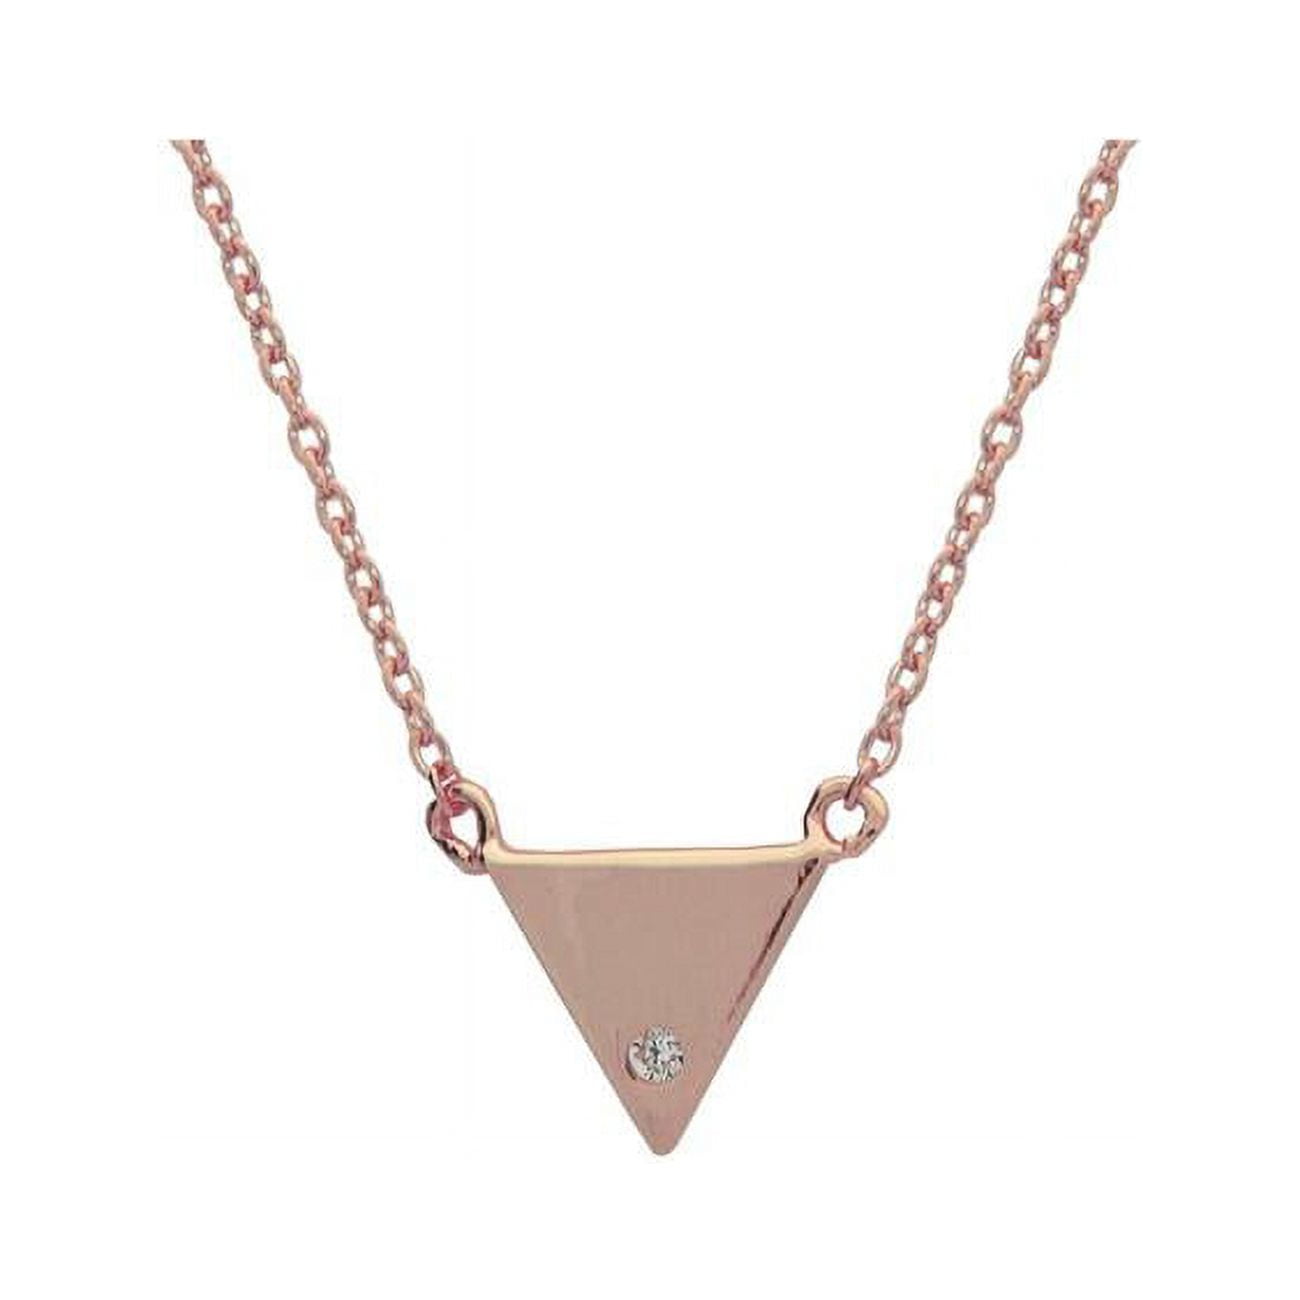 Je1133p 15 & 1 In. Rose Gold Mini Triangle & Cz Pendant Necklace In Sterling Silver